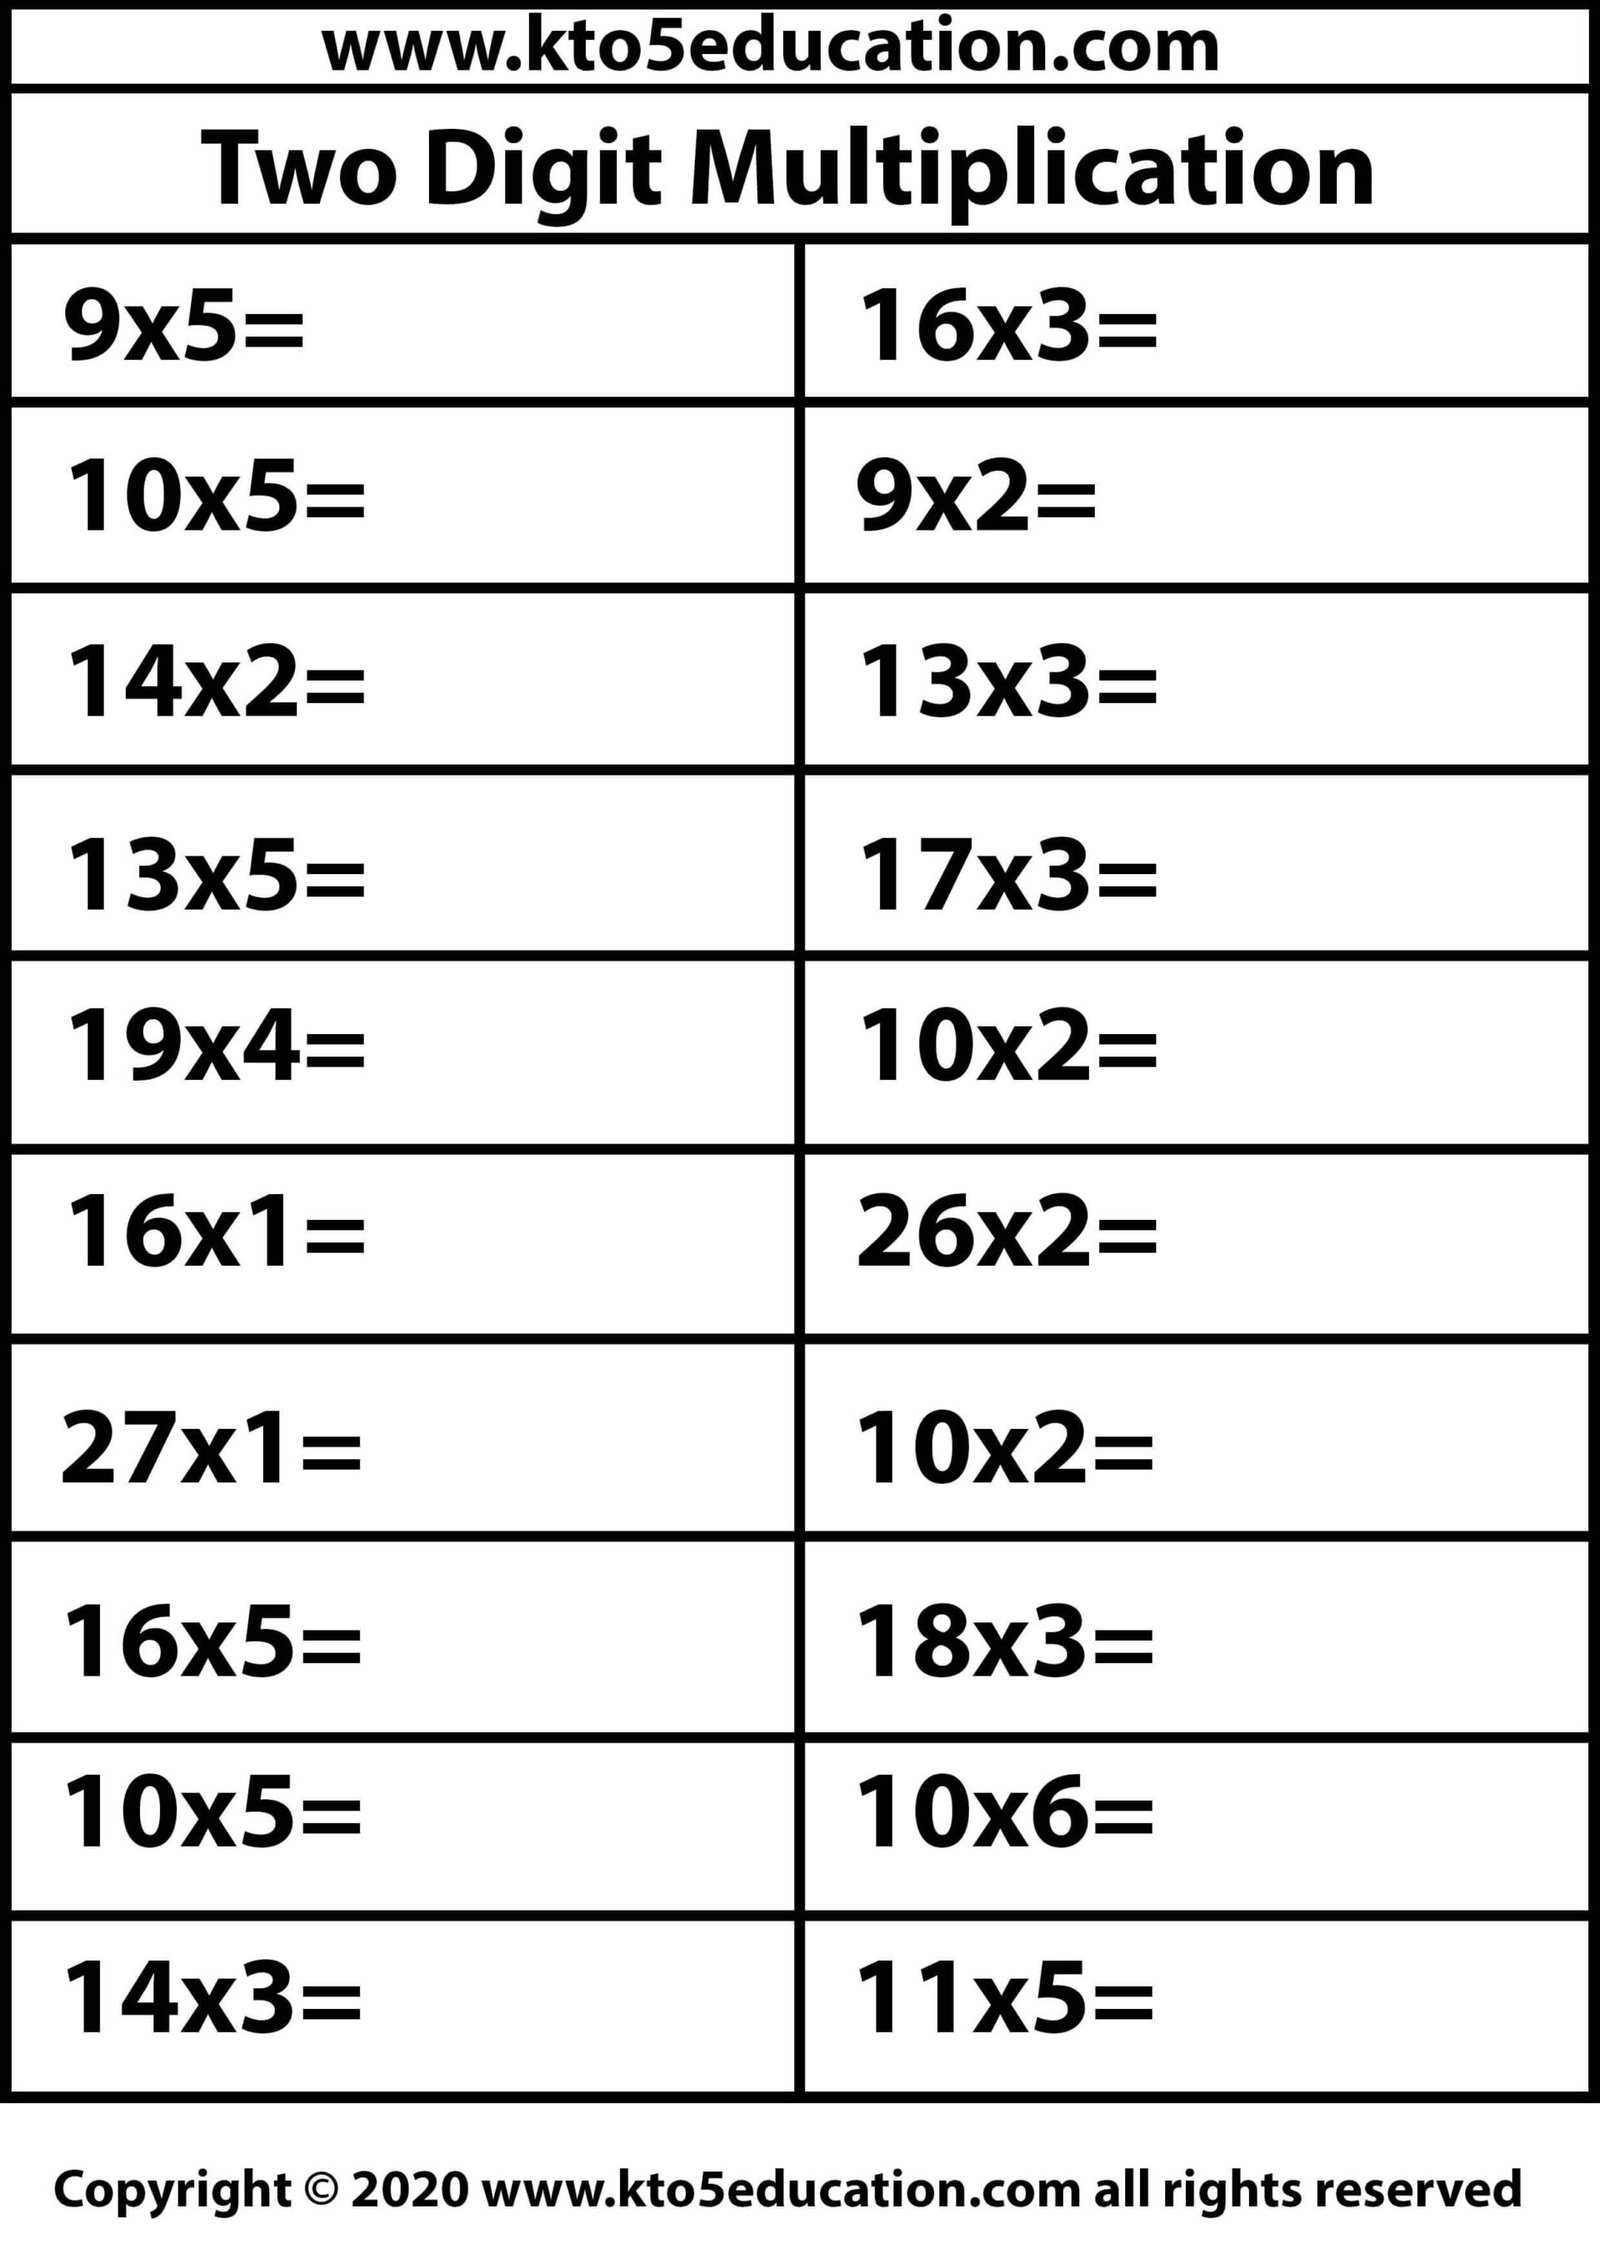 two-digit-multiplication-worksheet-5-kto5education